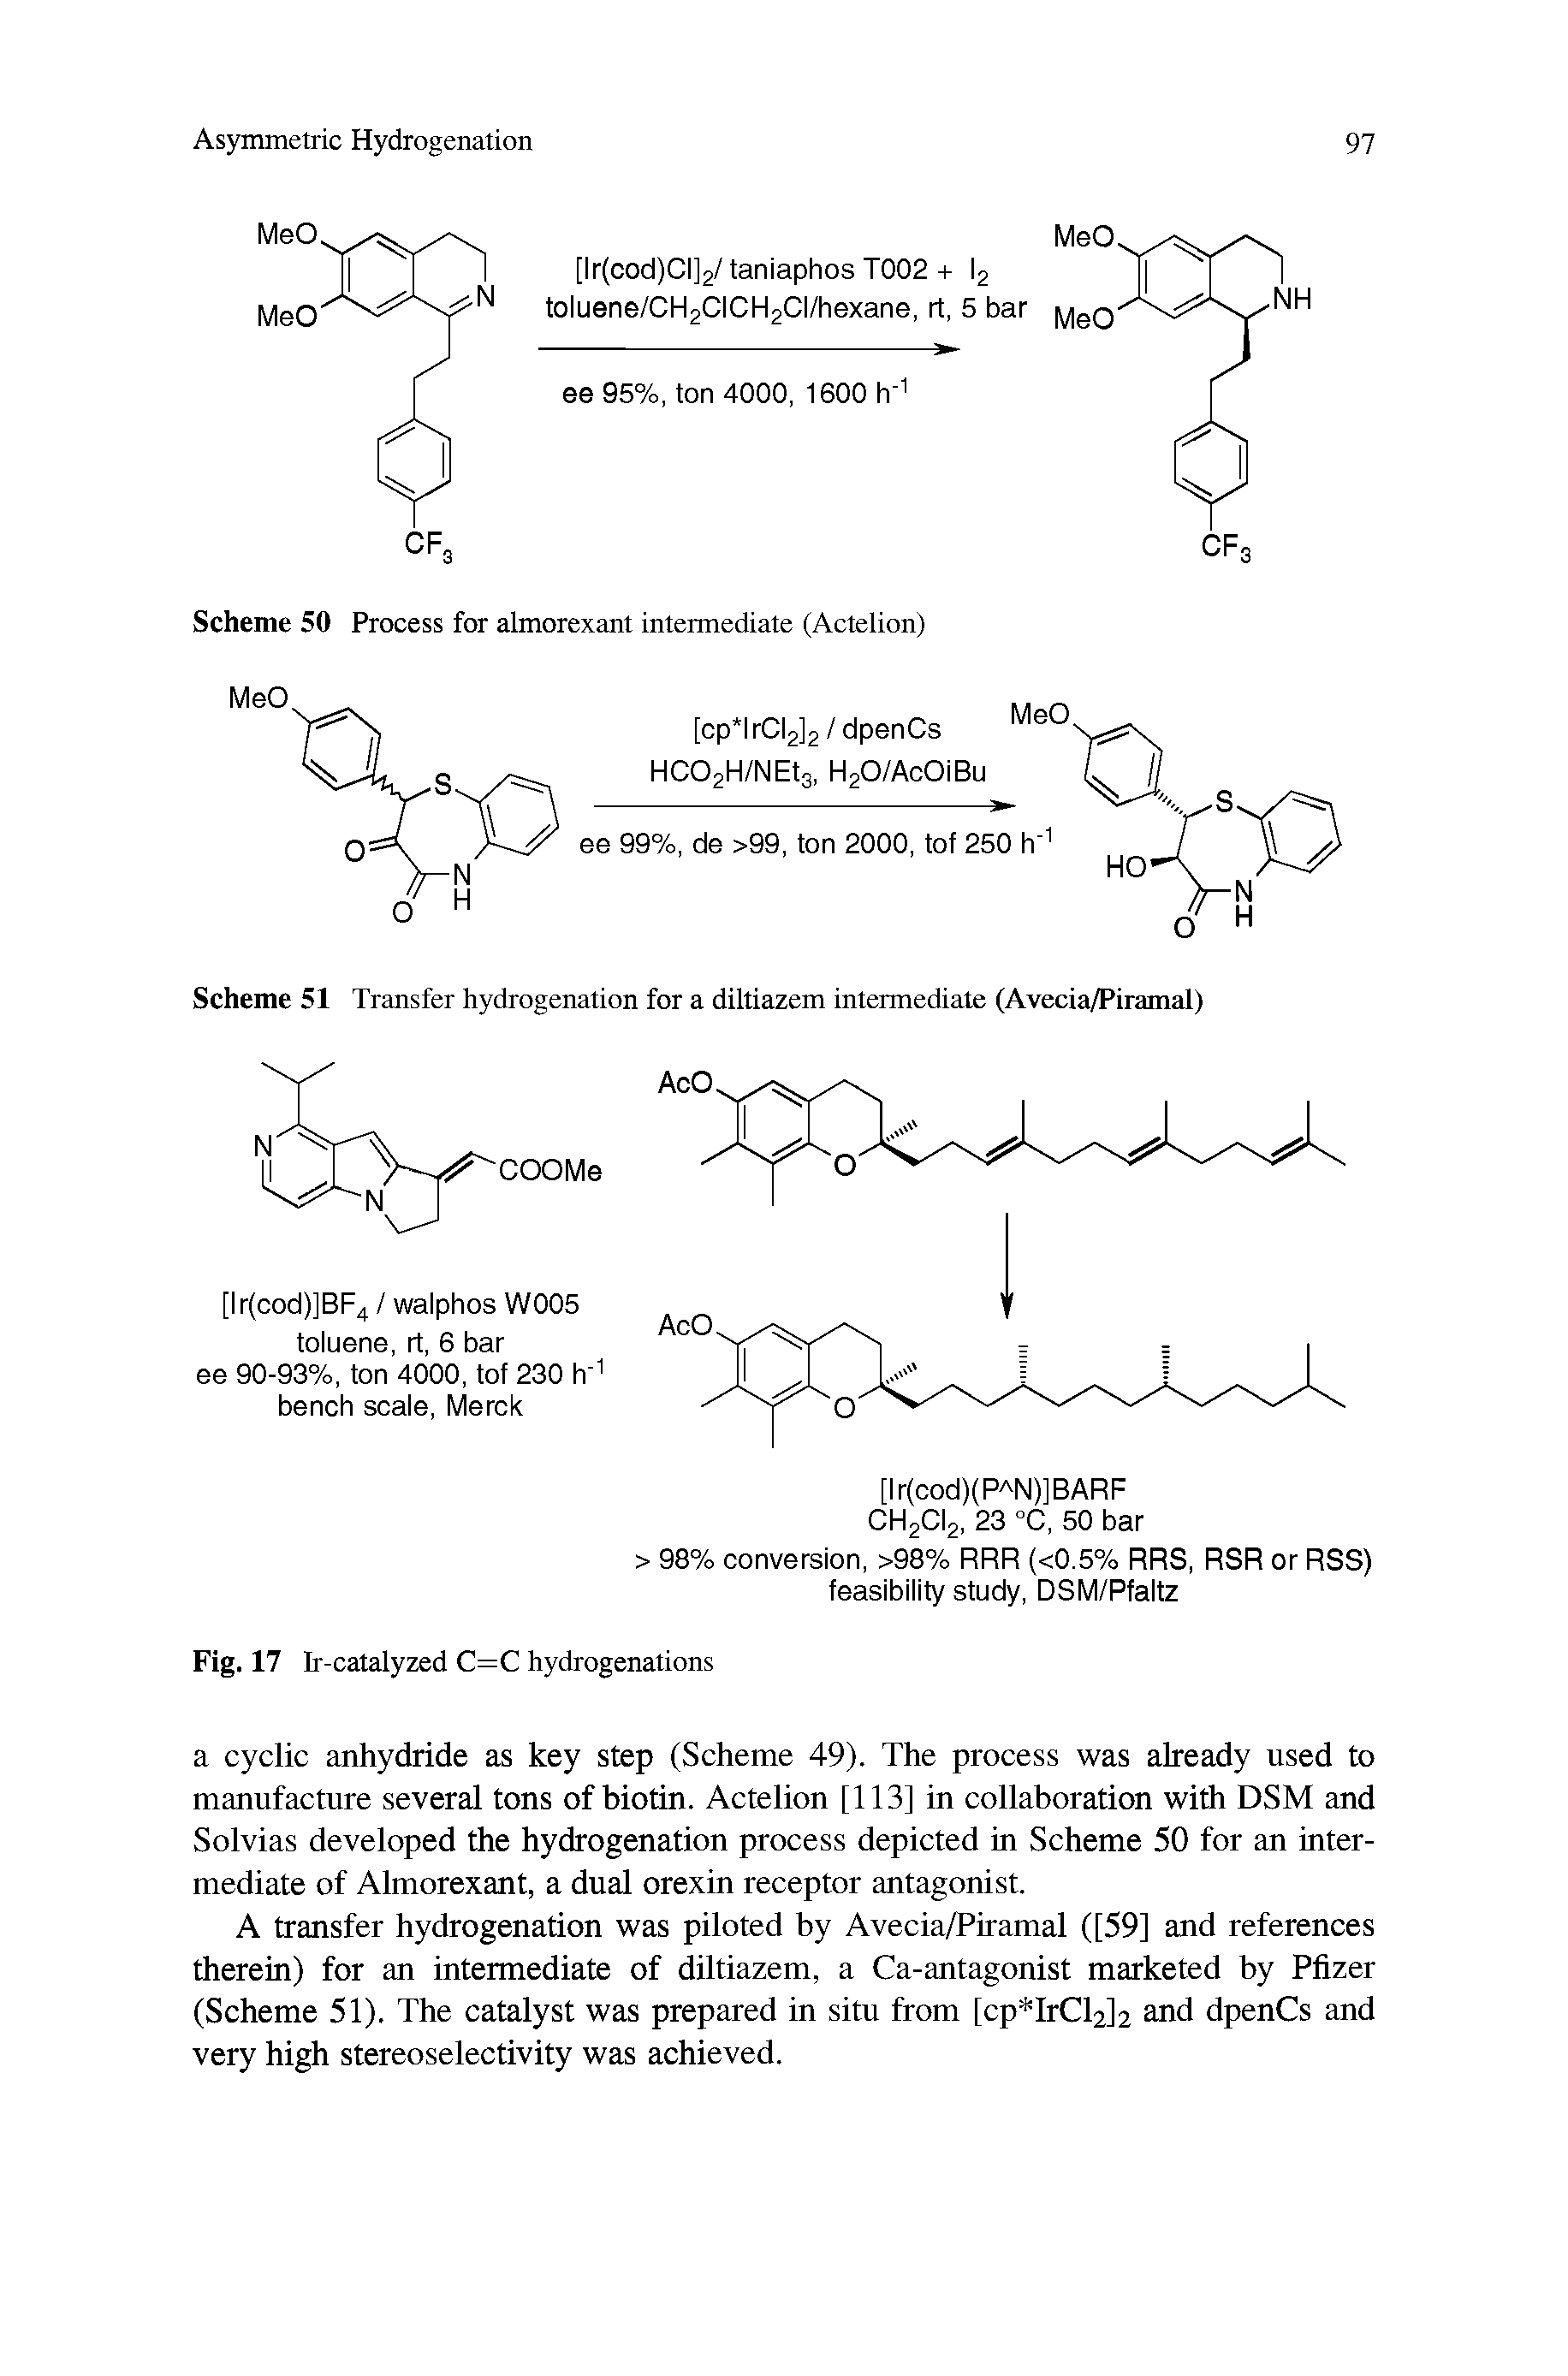 Scheme 51 Transfer hydrogenation for a diltiazem intermediate (Avecia/Piramal)...